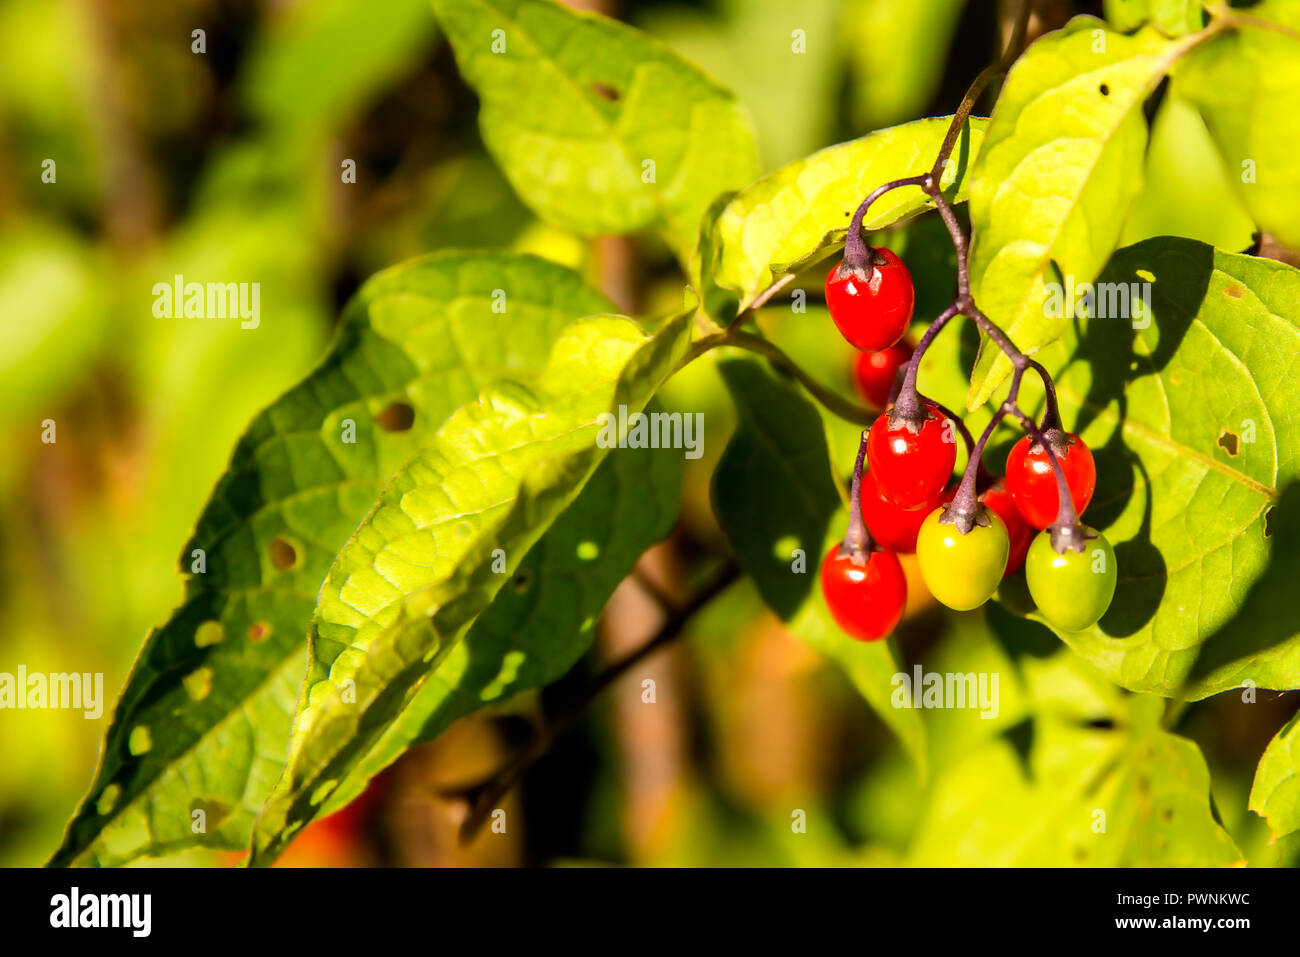 Solanum dulcamara, medicinal plant with ripe berries Stock Photo